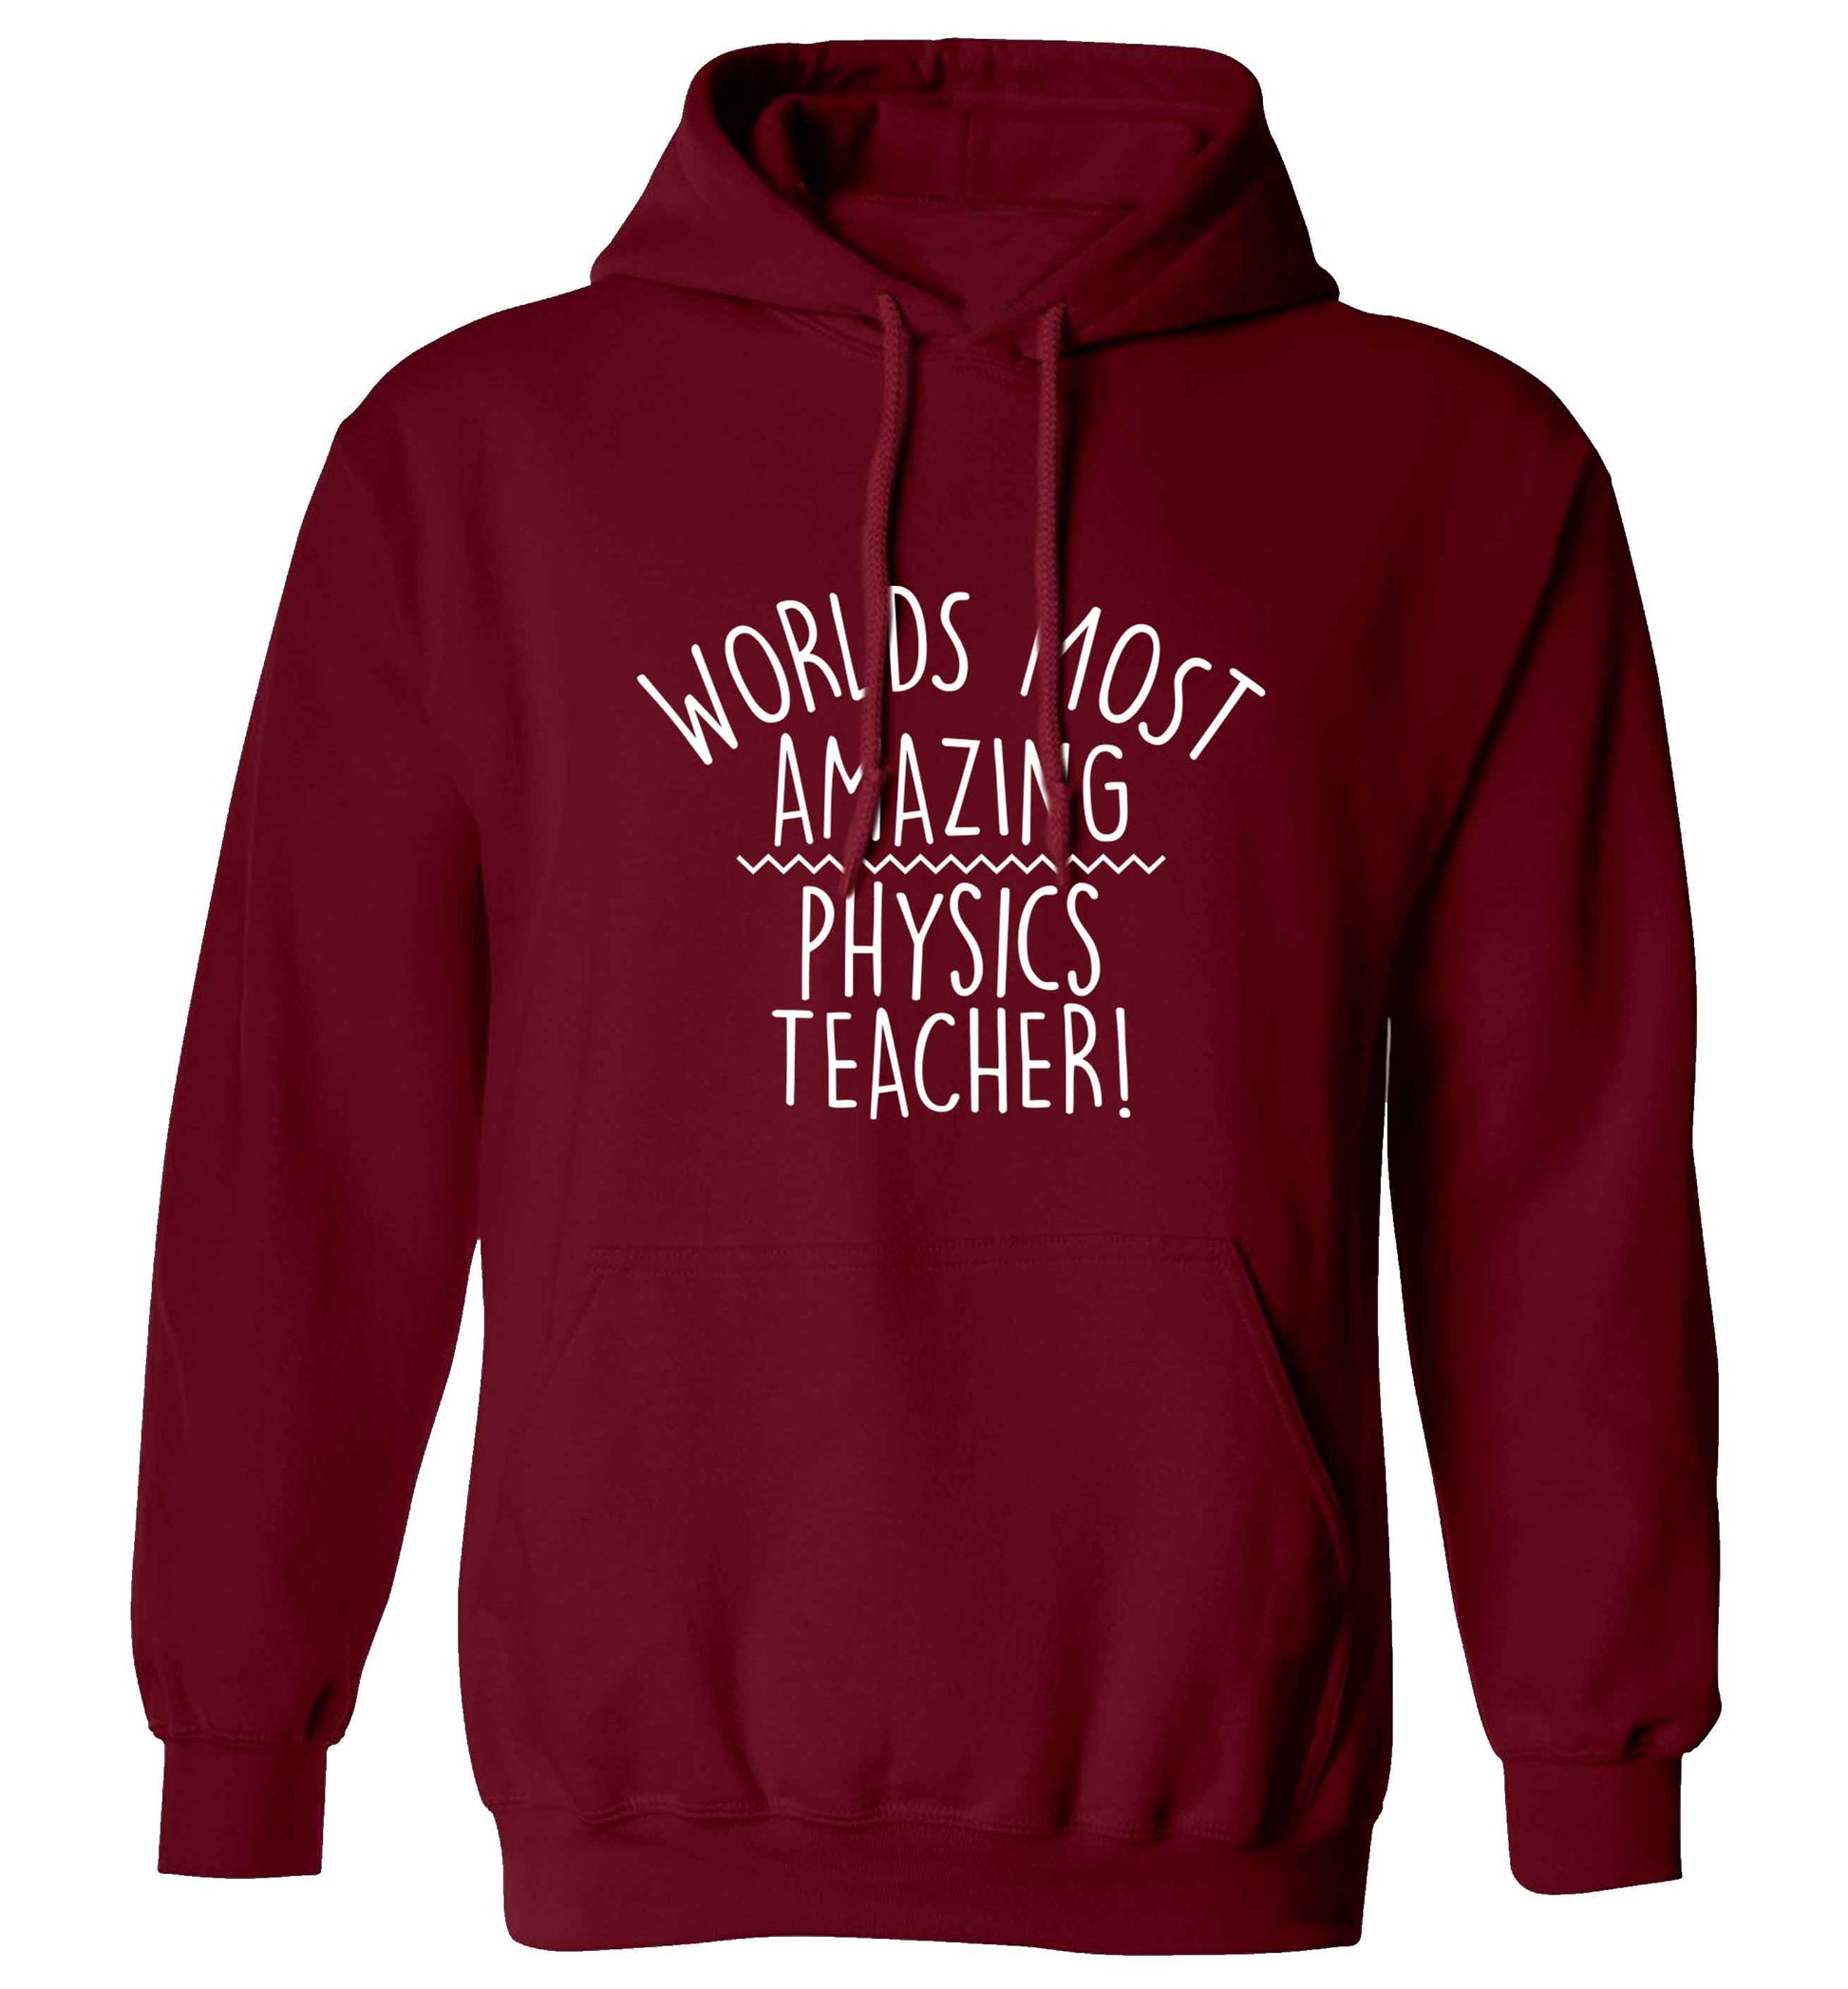 Worlds most amazing physics teacher adults unisex maroon hoodie 2XL